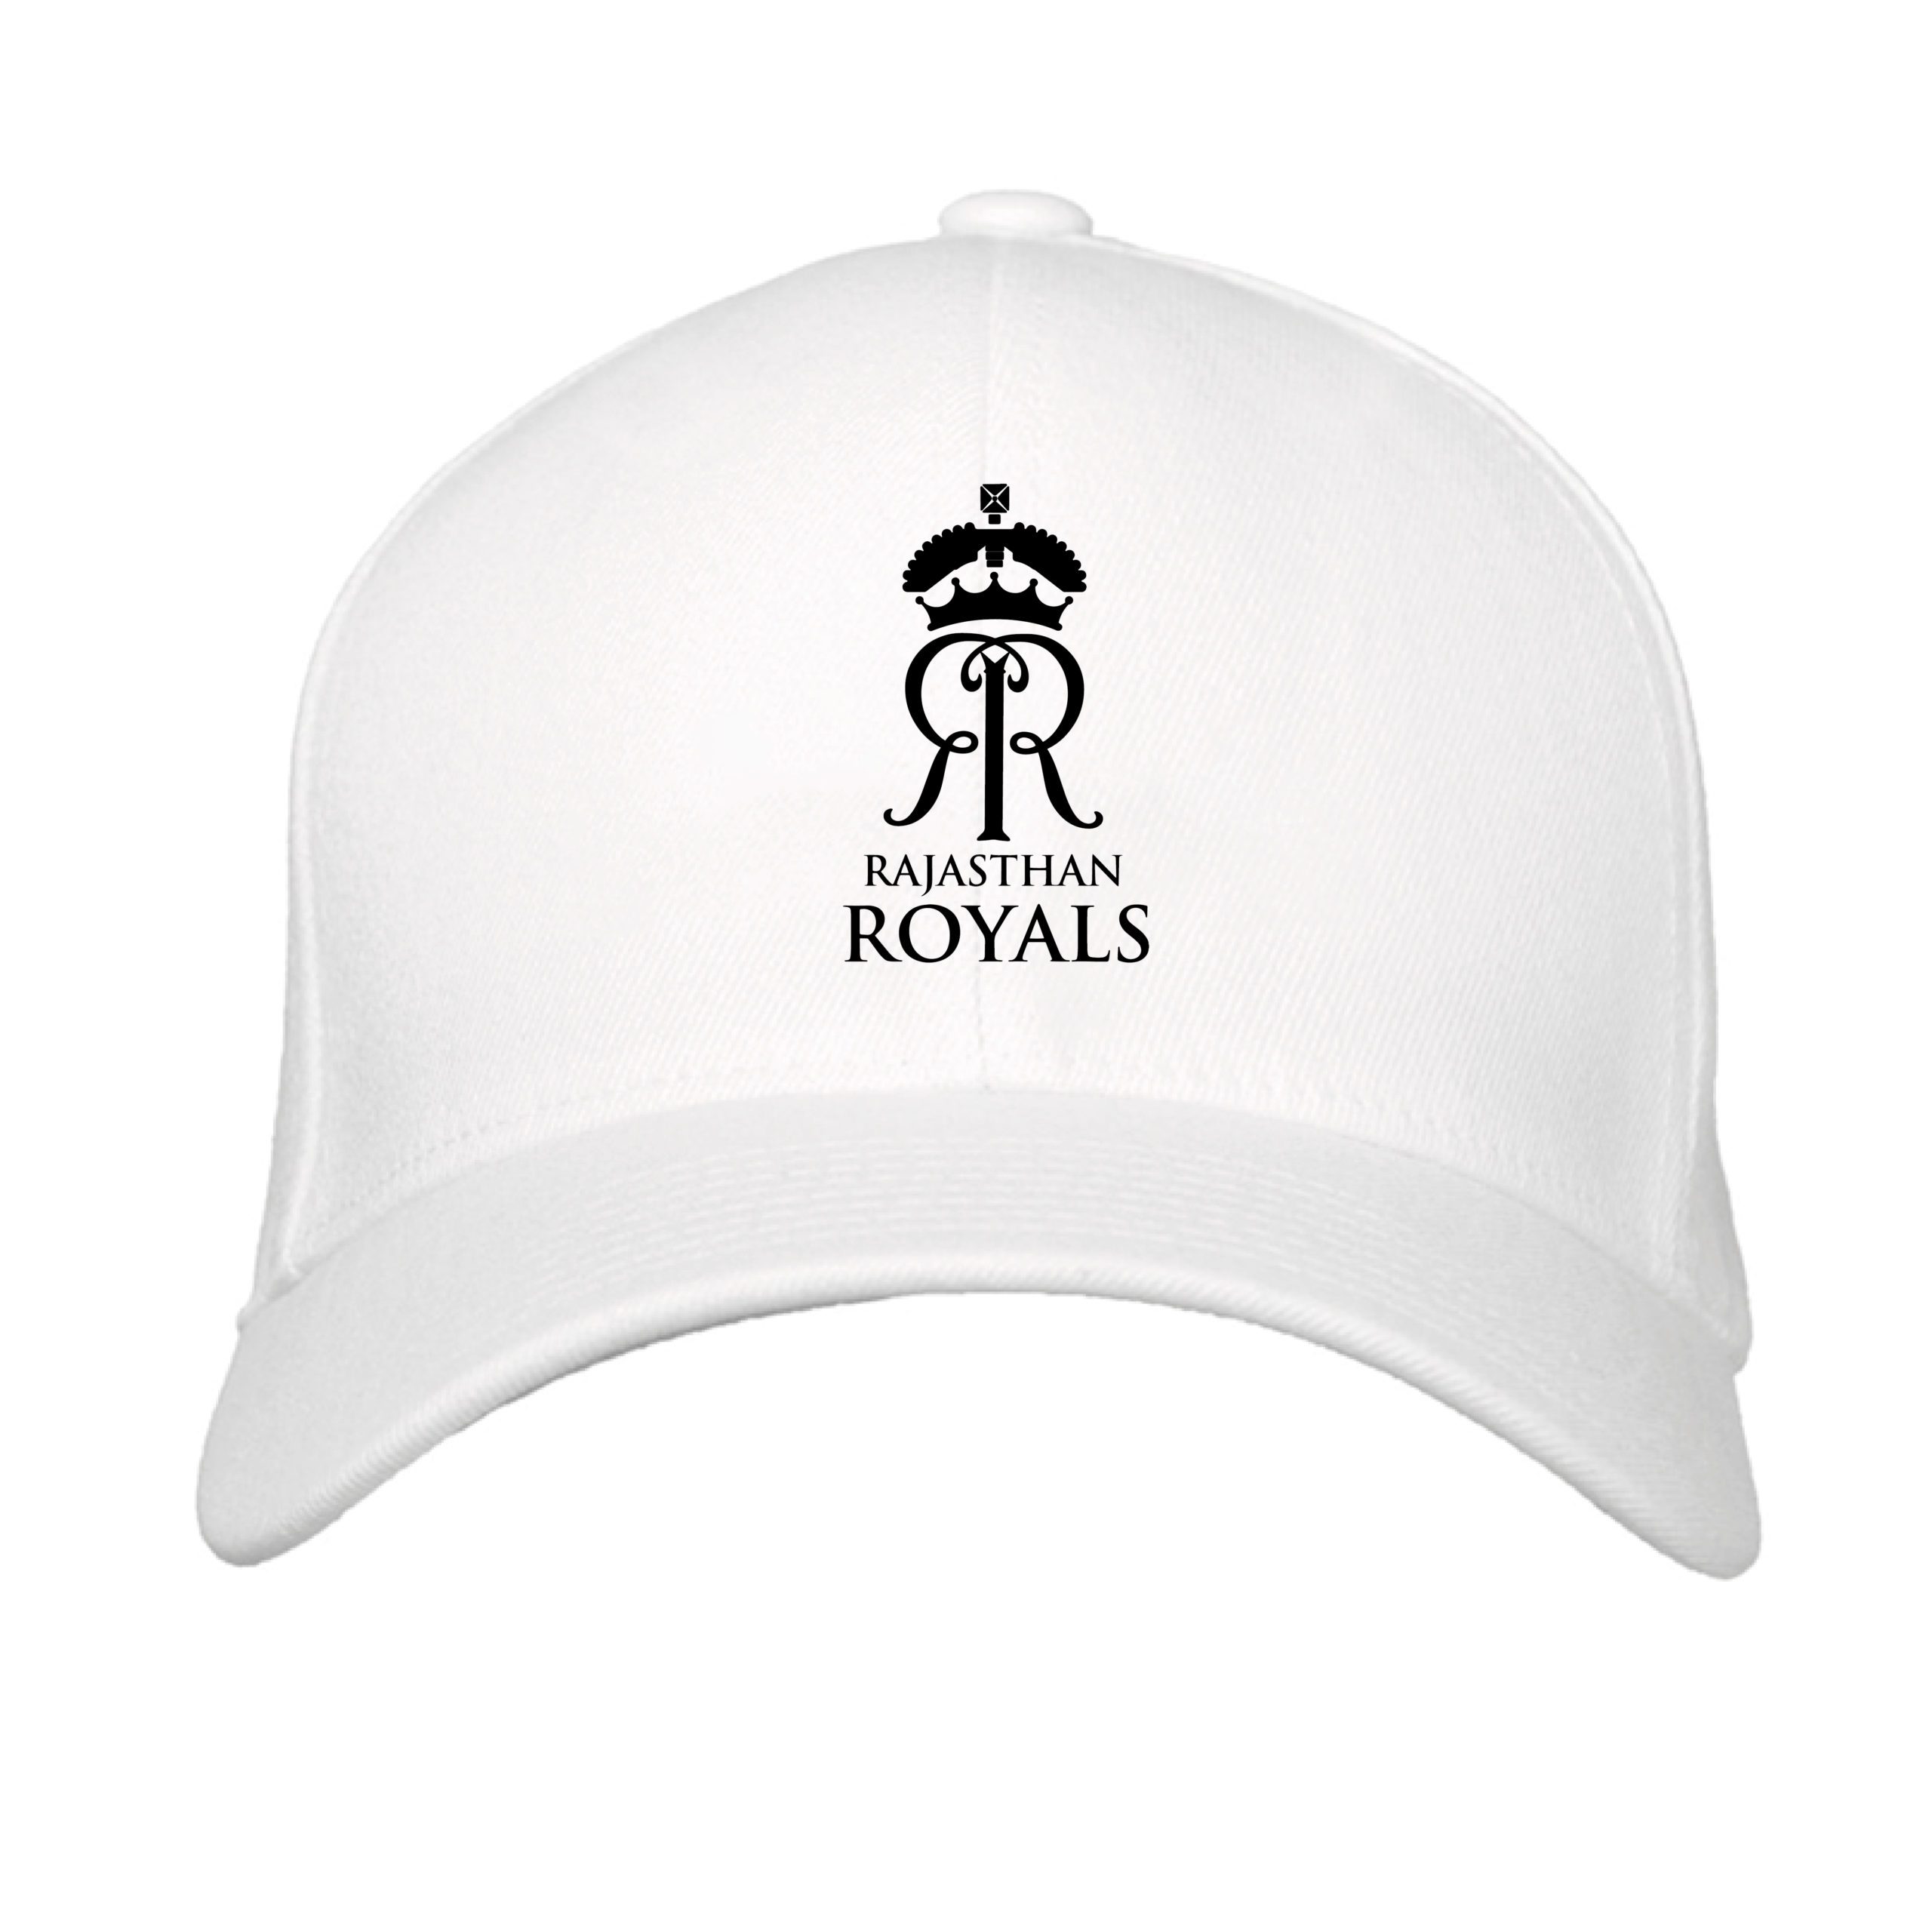 IPL RR Logo Printed Caps for Cricket Fans (Rajasthan Royals)